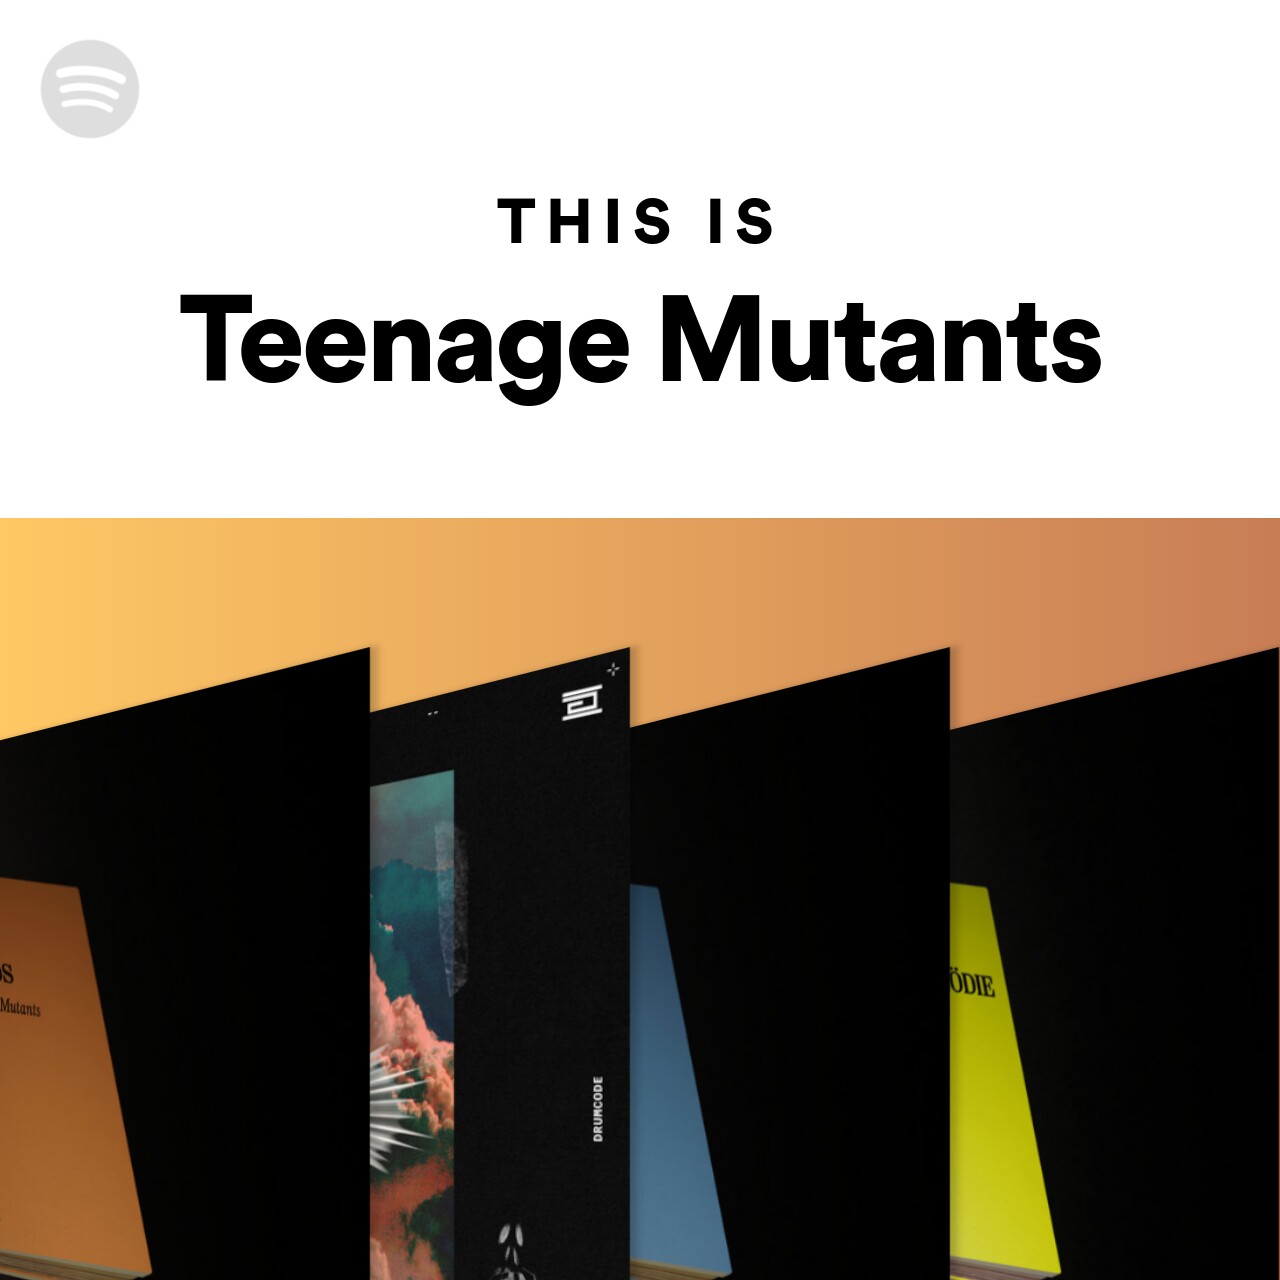 This Is Teenage Mutants